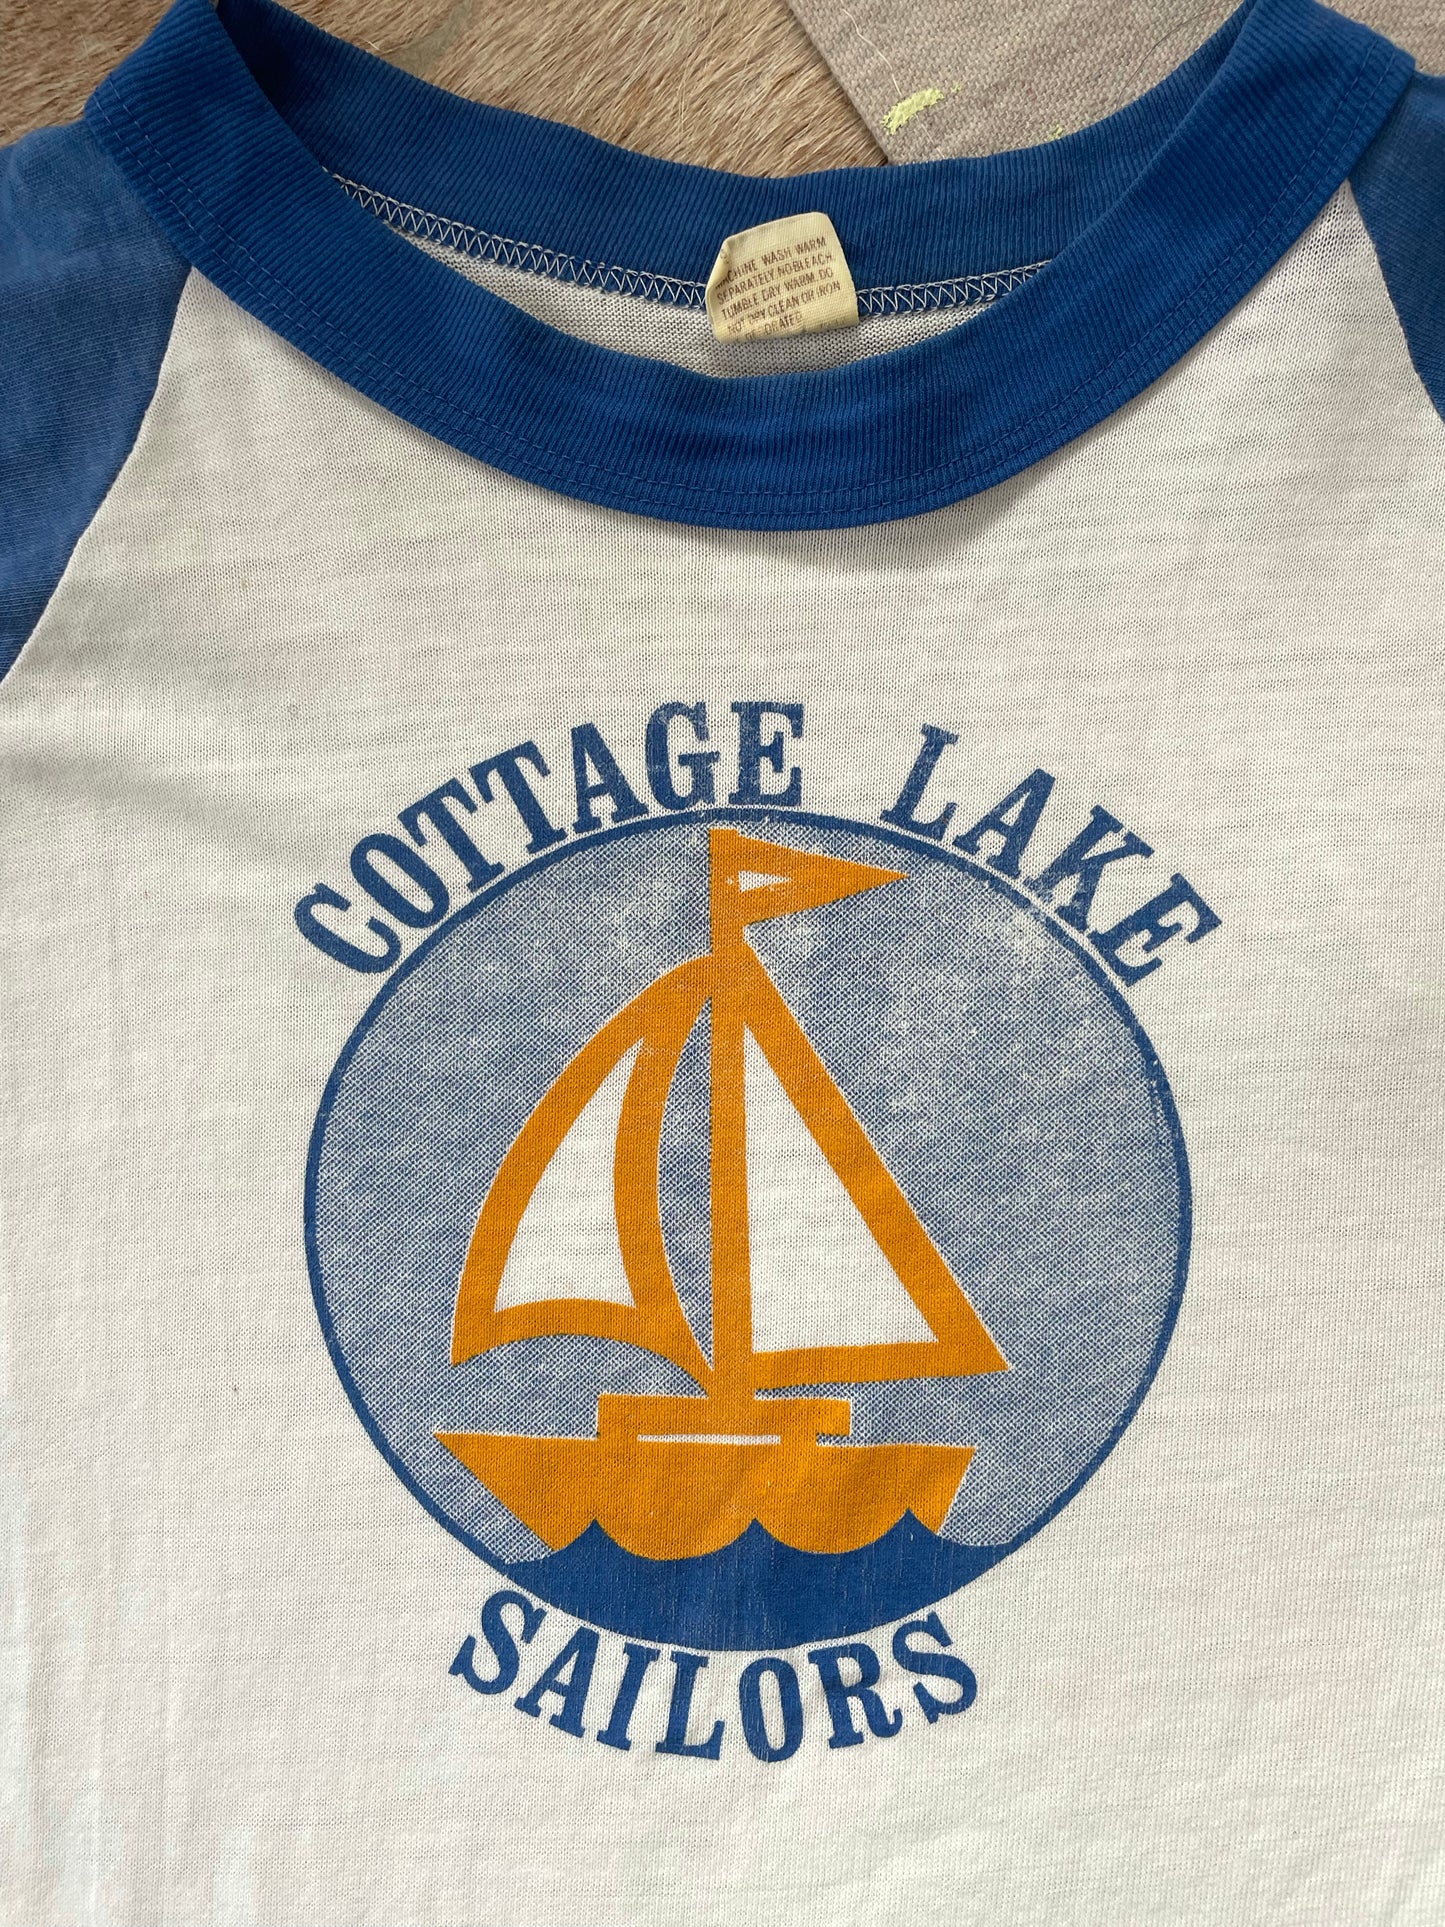 70s Cottage Lake Sailors Baseball Tee